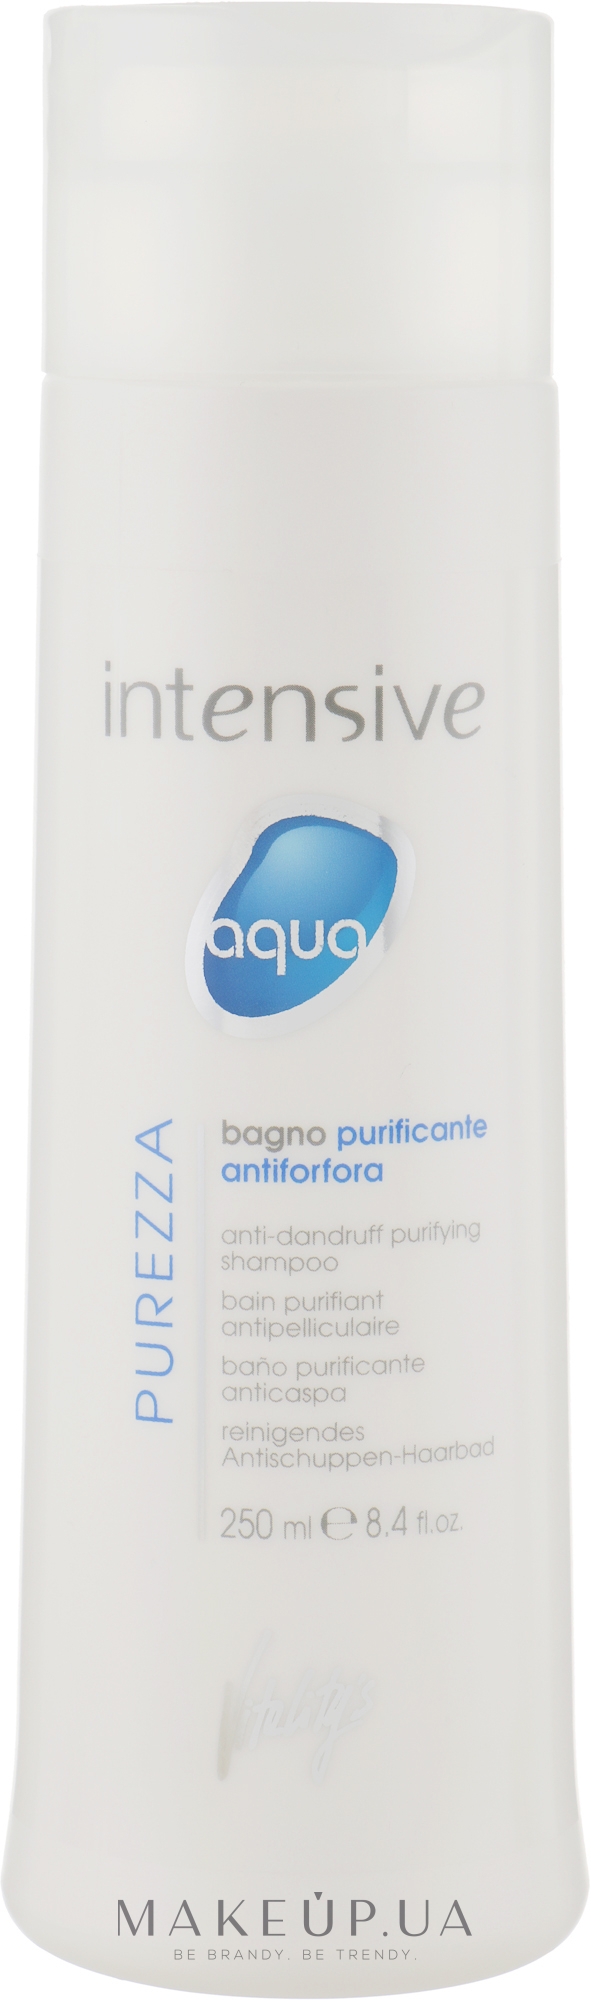 Шампунь проти лупи - vitality's Intensive Aqua Purify Anti-Dandruff Shampoo Purifying — фото 250ml